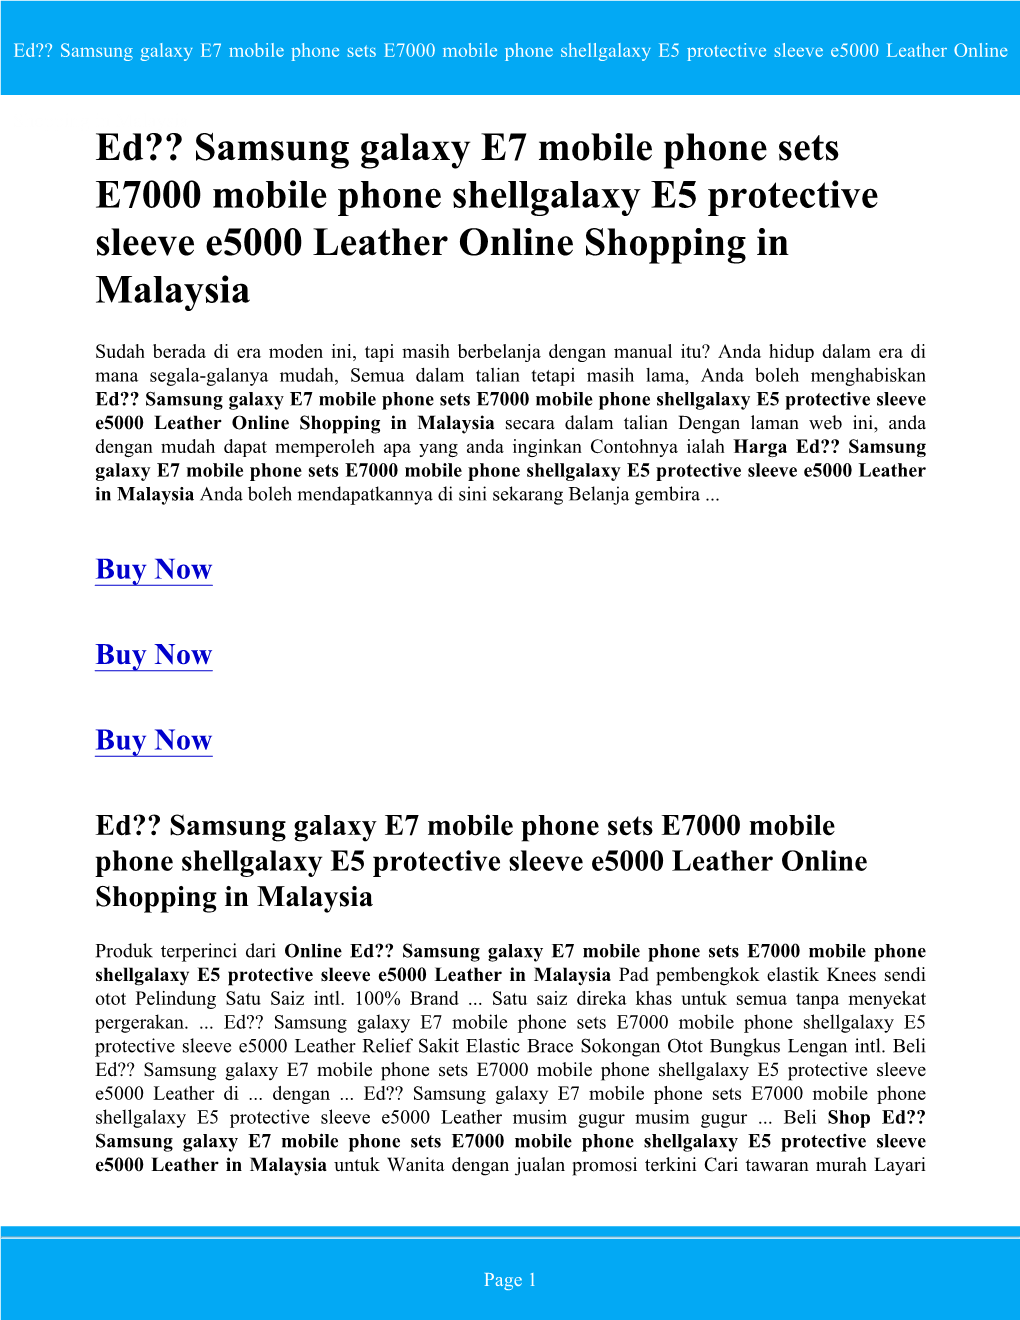 Ed?? Samsung Galaxy E7 Mobile Phone Sets E7000 Mobile Phone Shellgalaxy E5 Protective Sleeve E5000 Leather Online